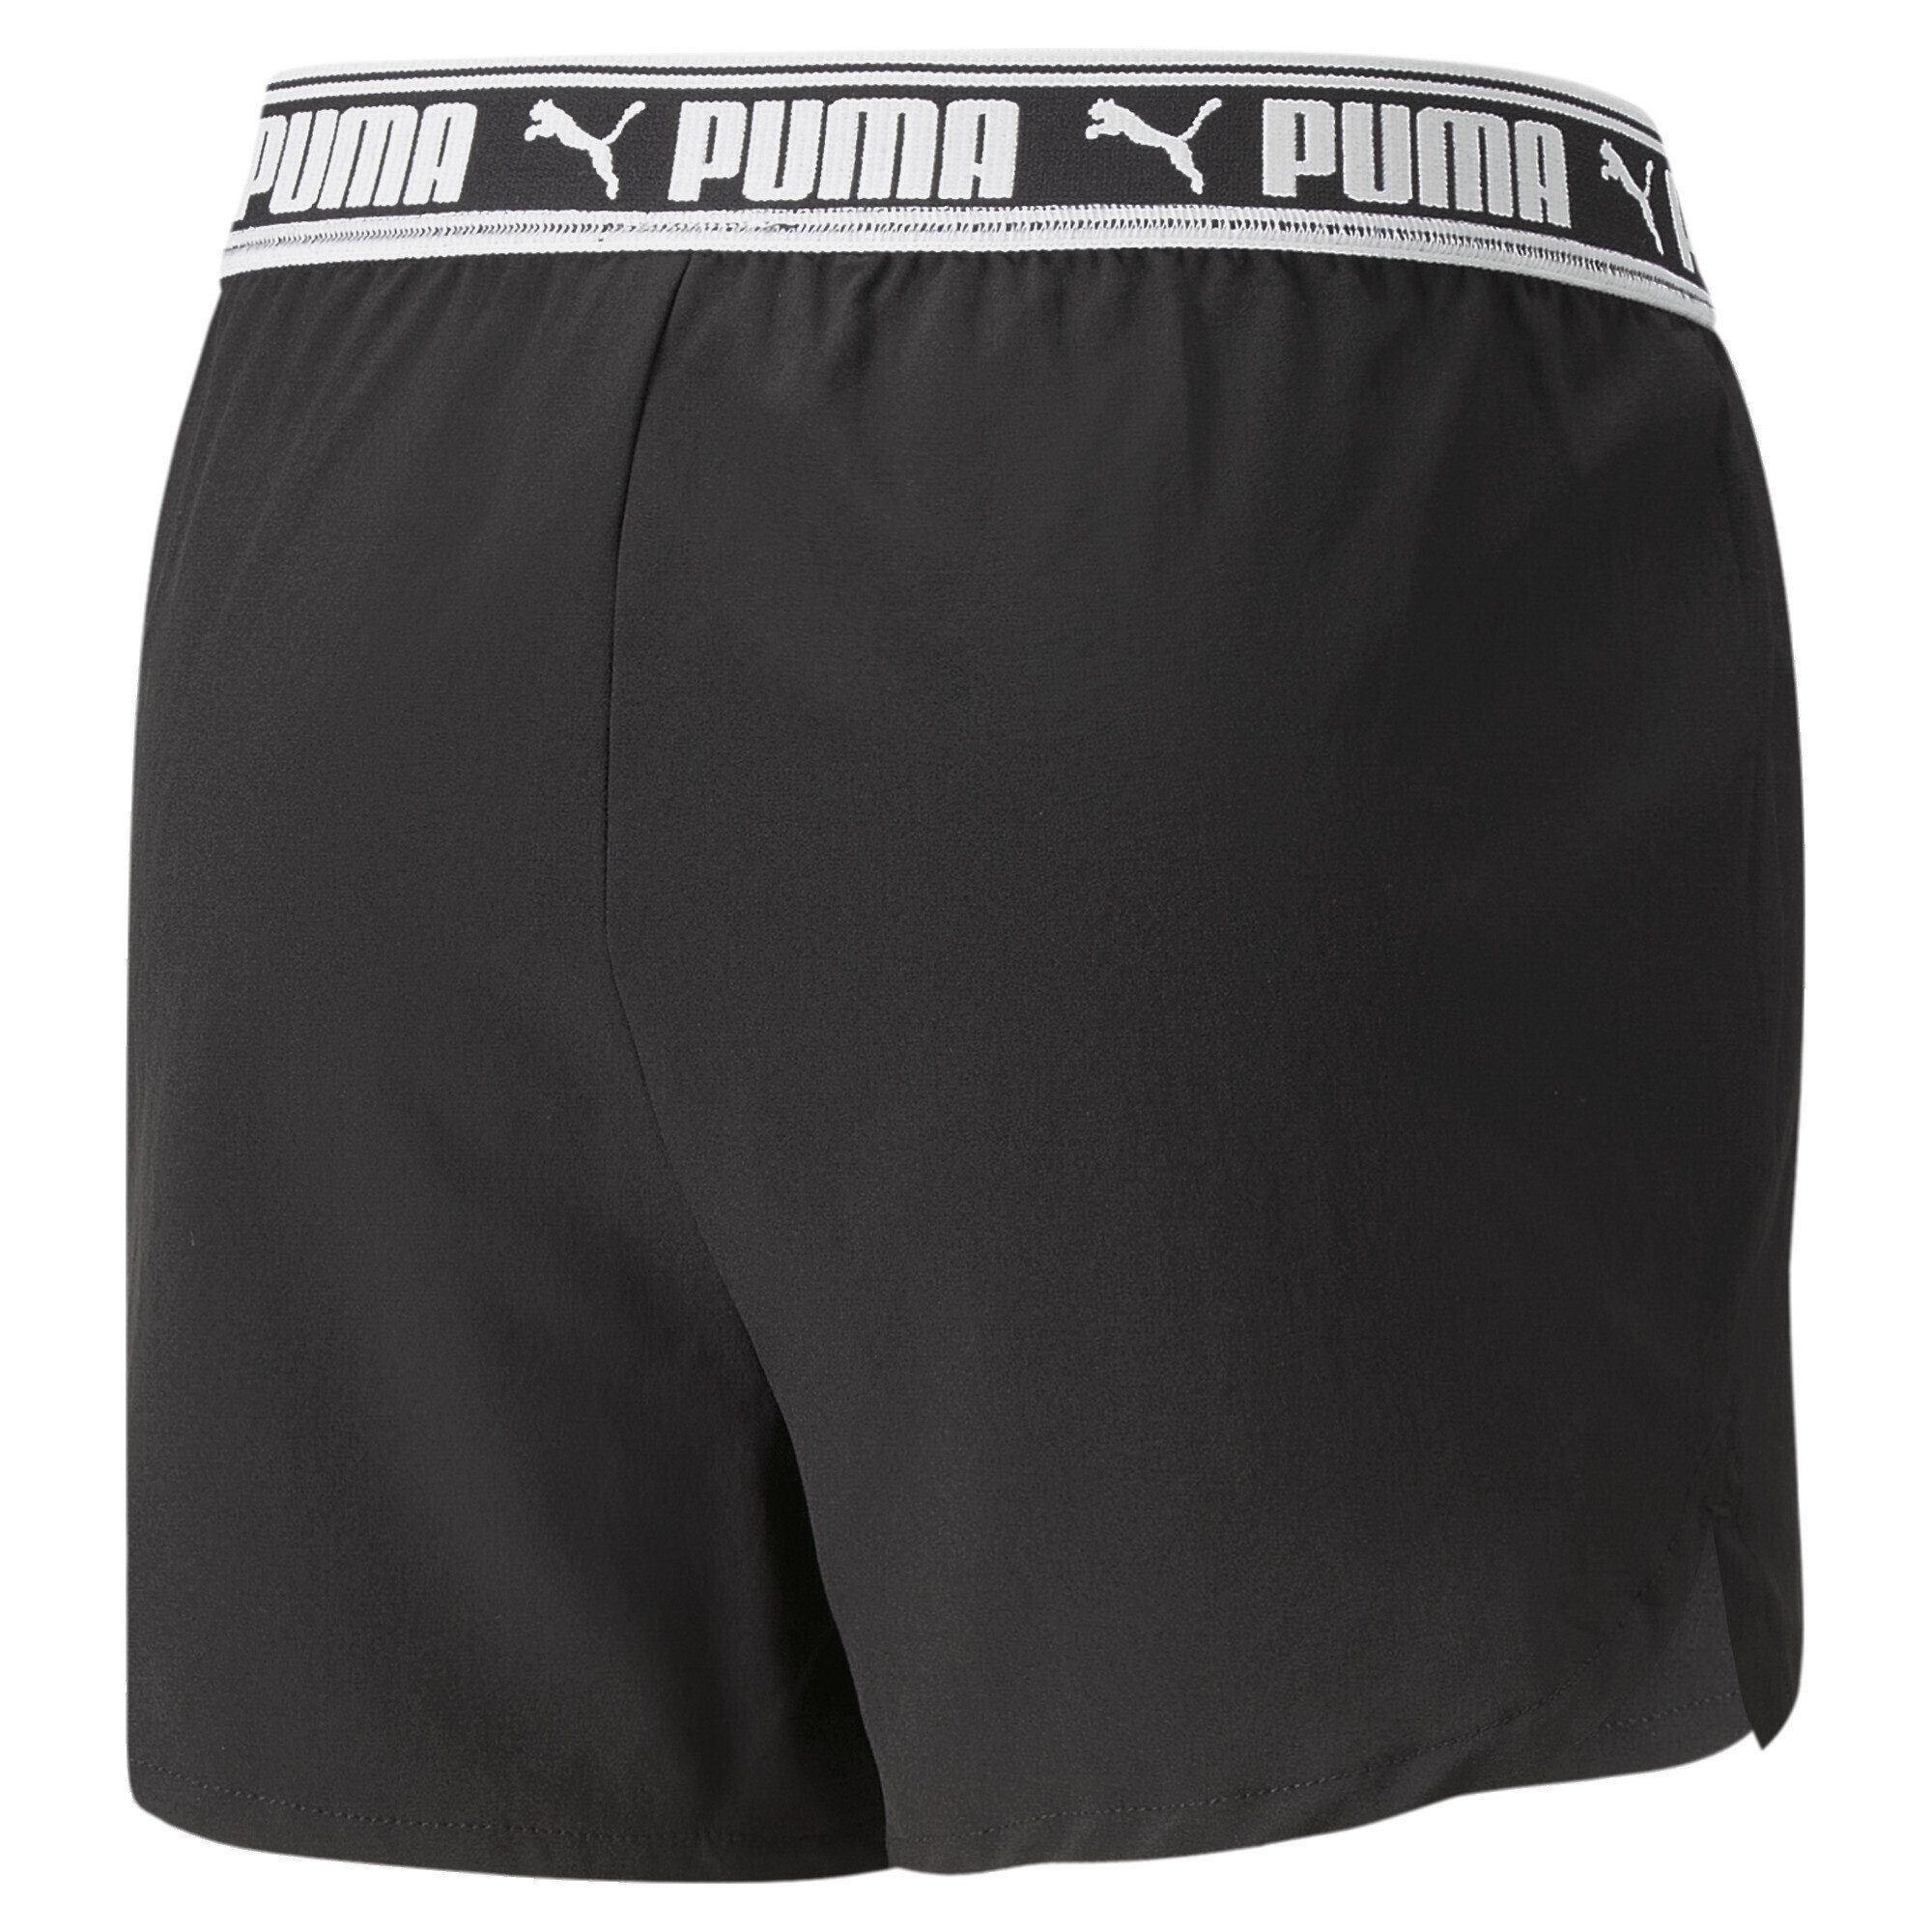 Strong PUMA Shorts Laufshorts Jugendliche Woven Black